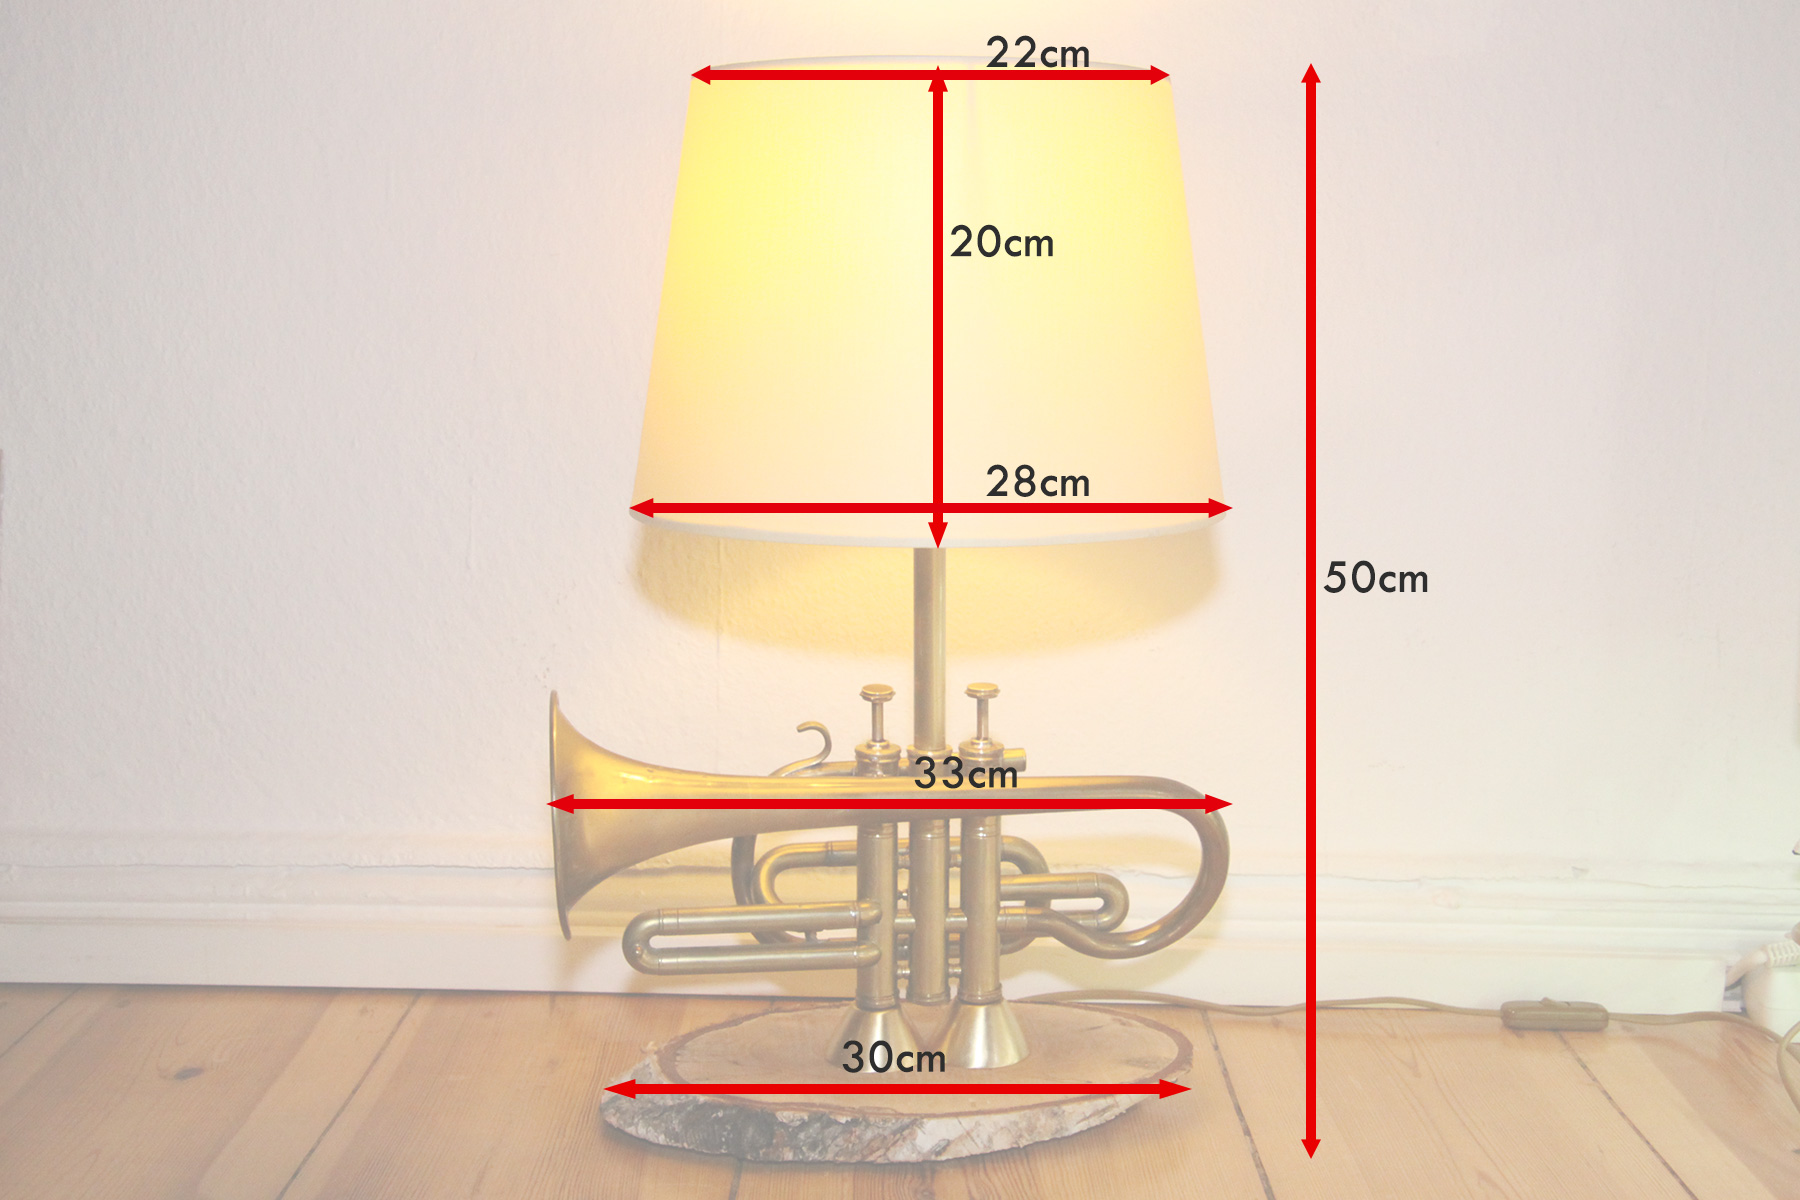 Trumpet lamp floor lamp brass wood gold beige vintage handmade